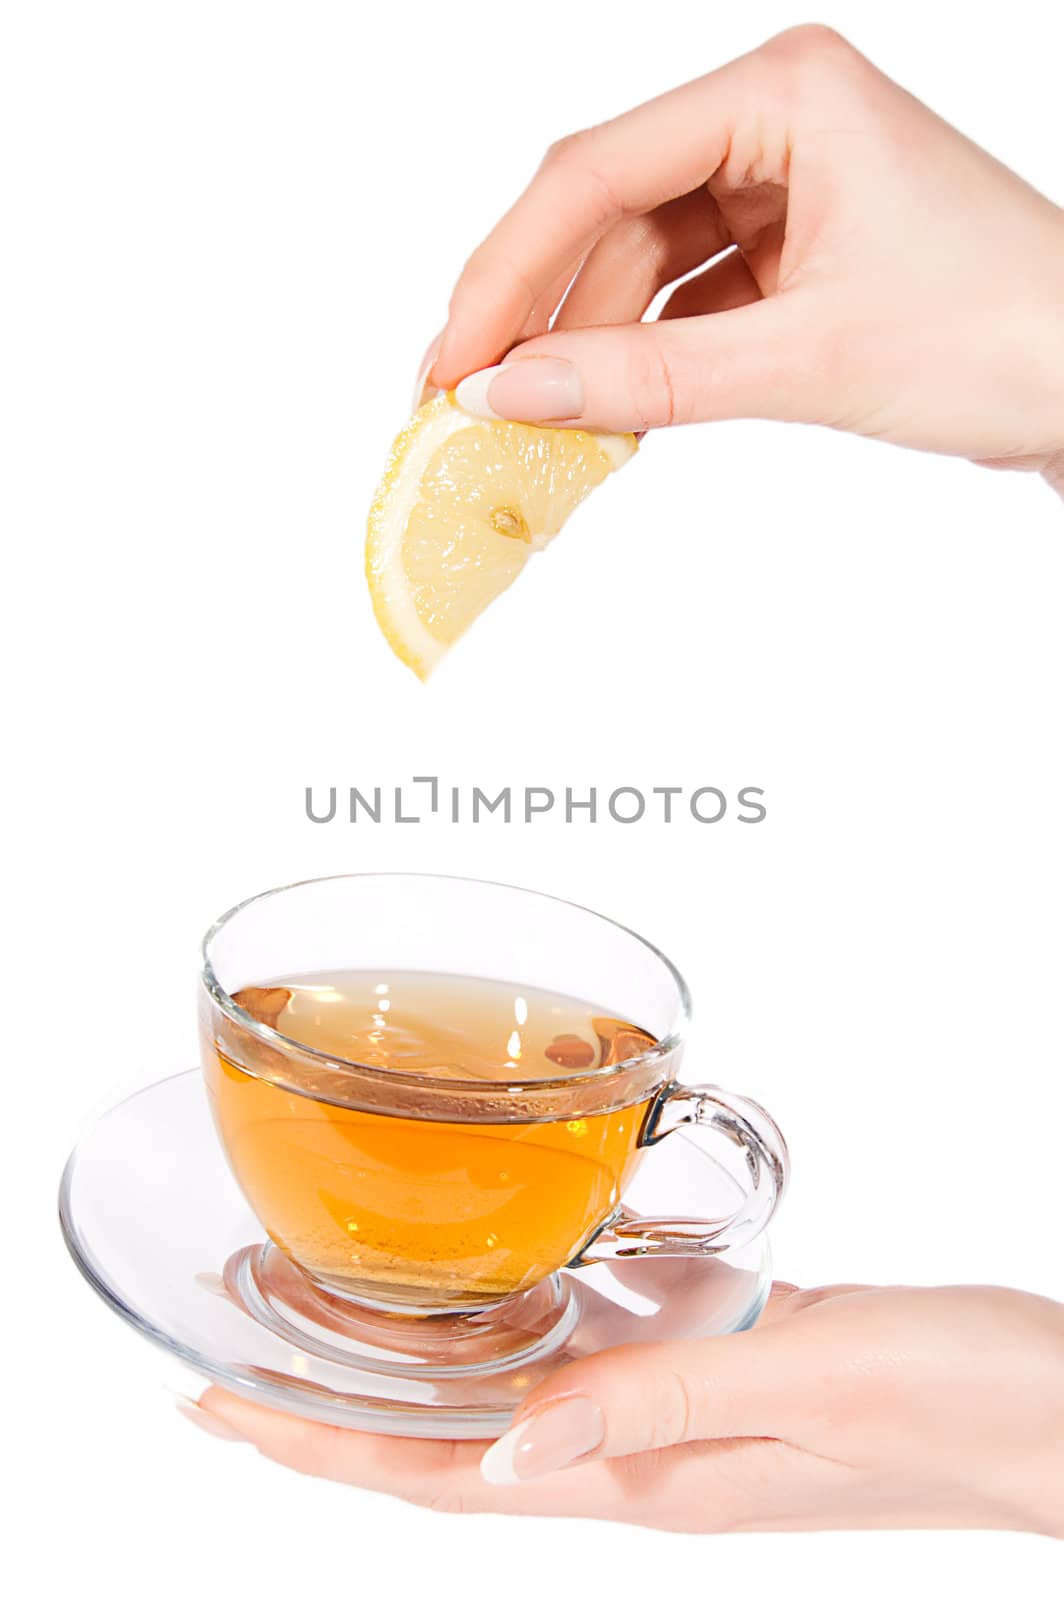 Hand adding lemon to tea by Angel_a